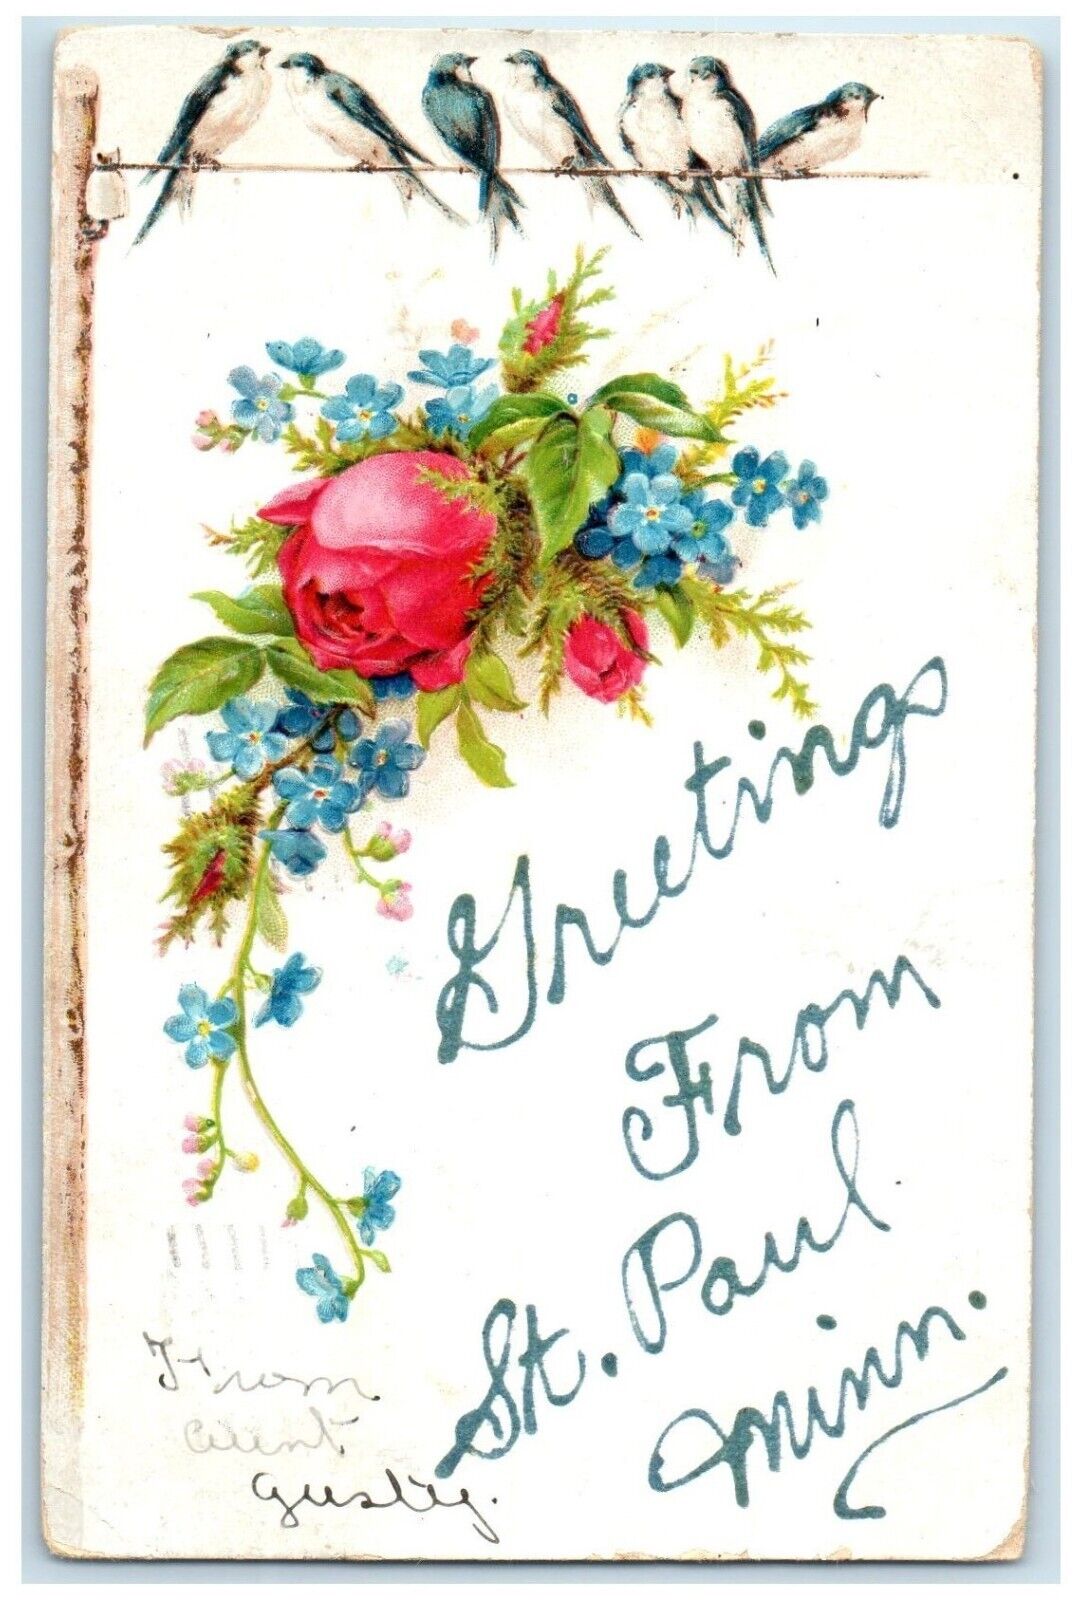 1907 Greetings From St. Paul Minnesota Embossed Glitter Vintage Antique Postcard